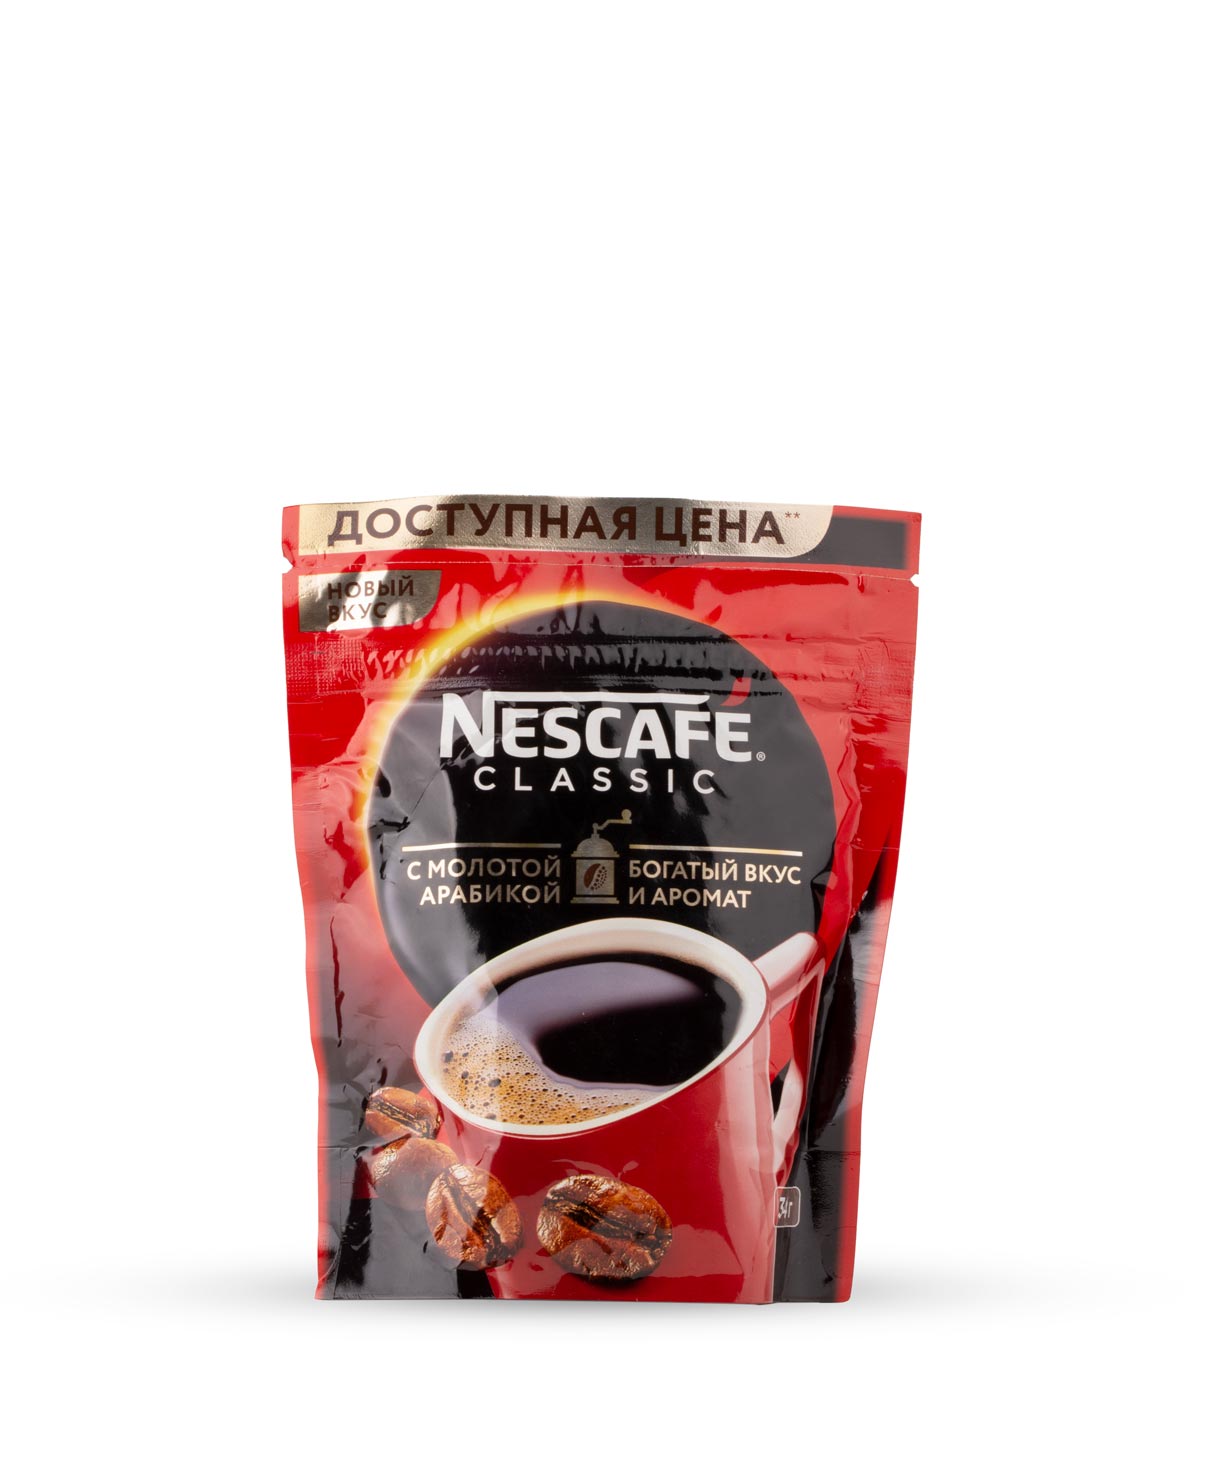 Սուրճ լուծվող «Nescafe Classic» 34գ